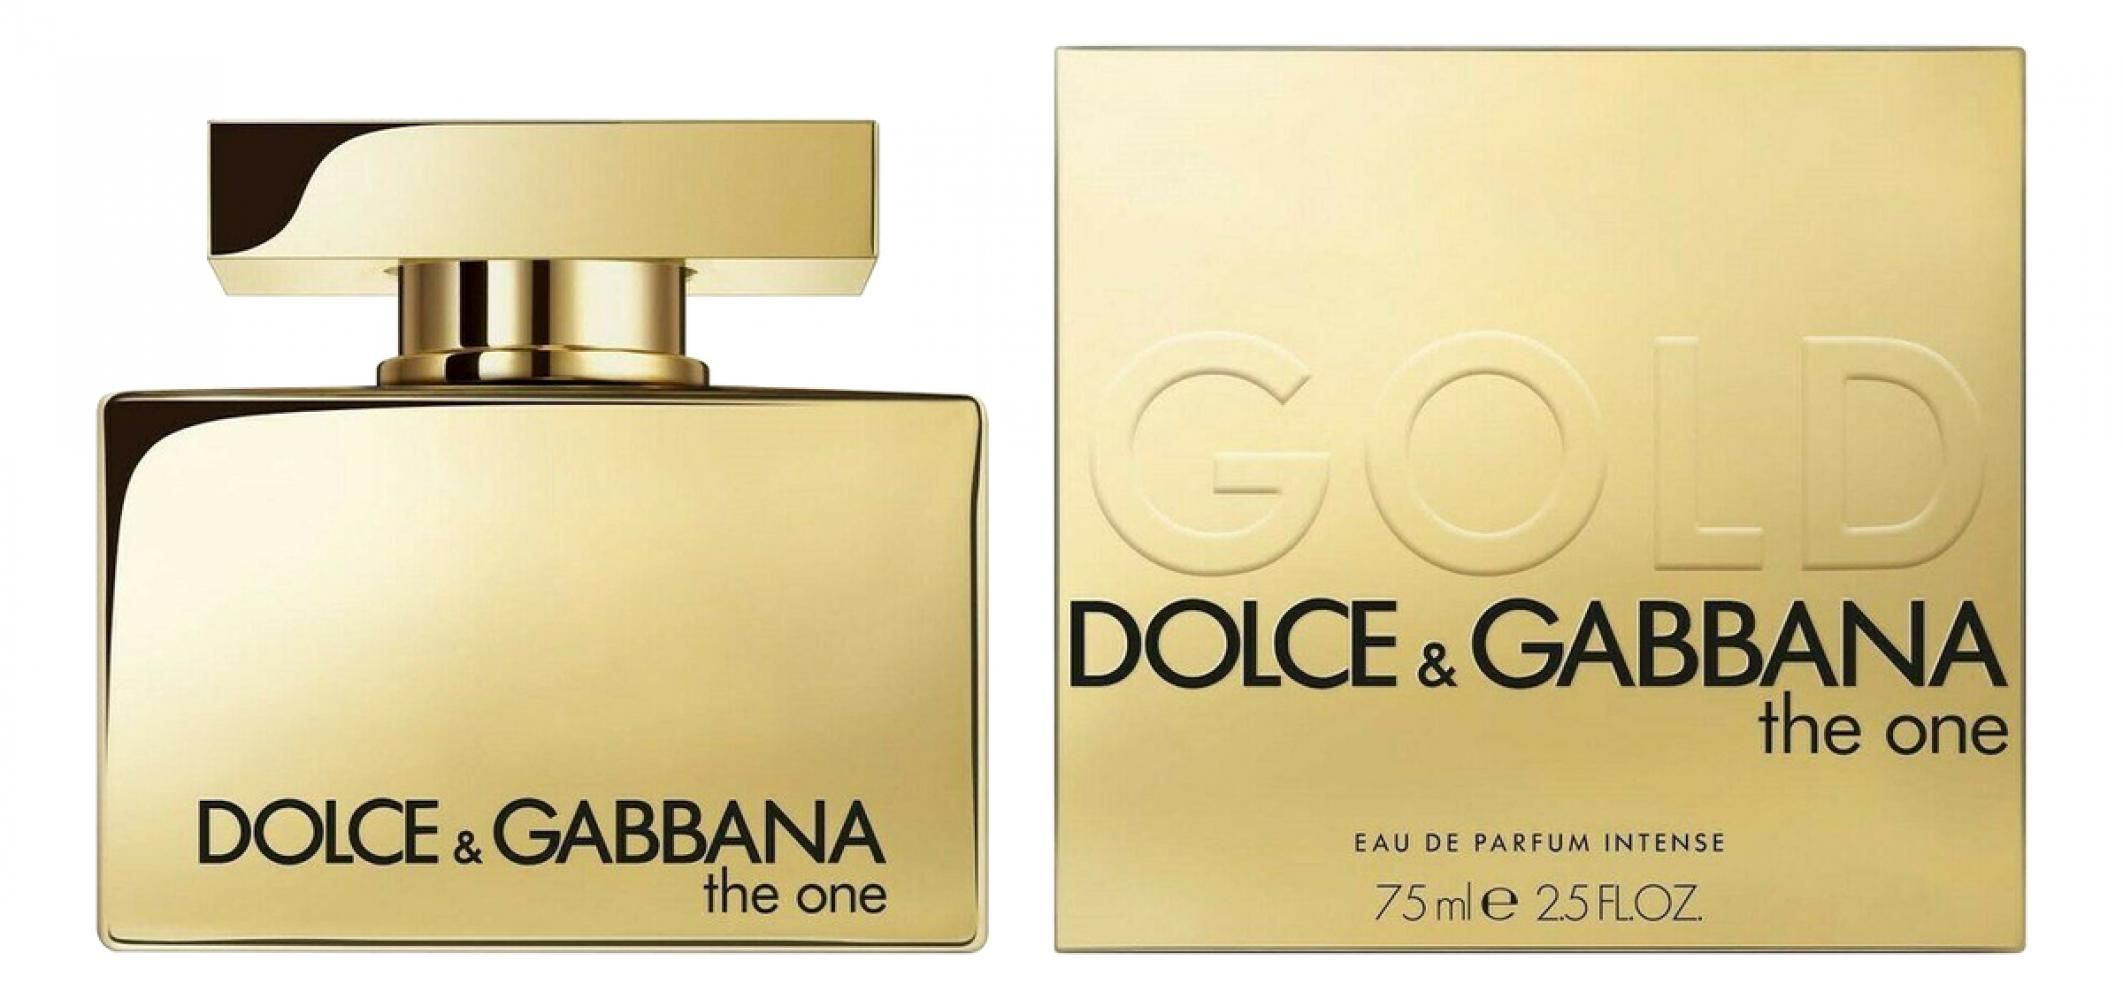 Дольче габбана ван цена. Dolce Gabbana the one Gold intense. Dolce & Gabbana the one 75 мл. Dolce & Gabbana the one, EDP, 75 ml. Духи Gold Dolce Gabbana the one.